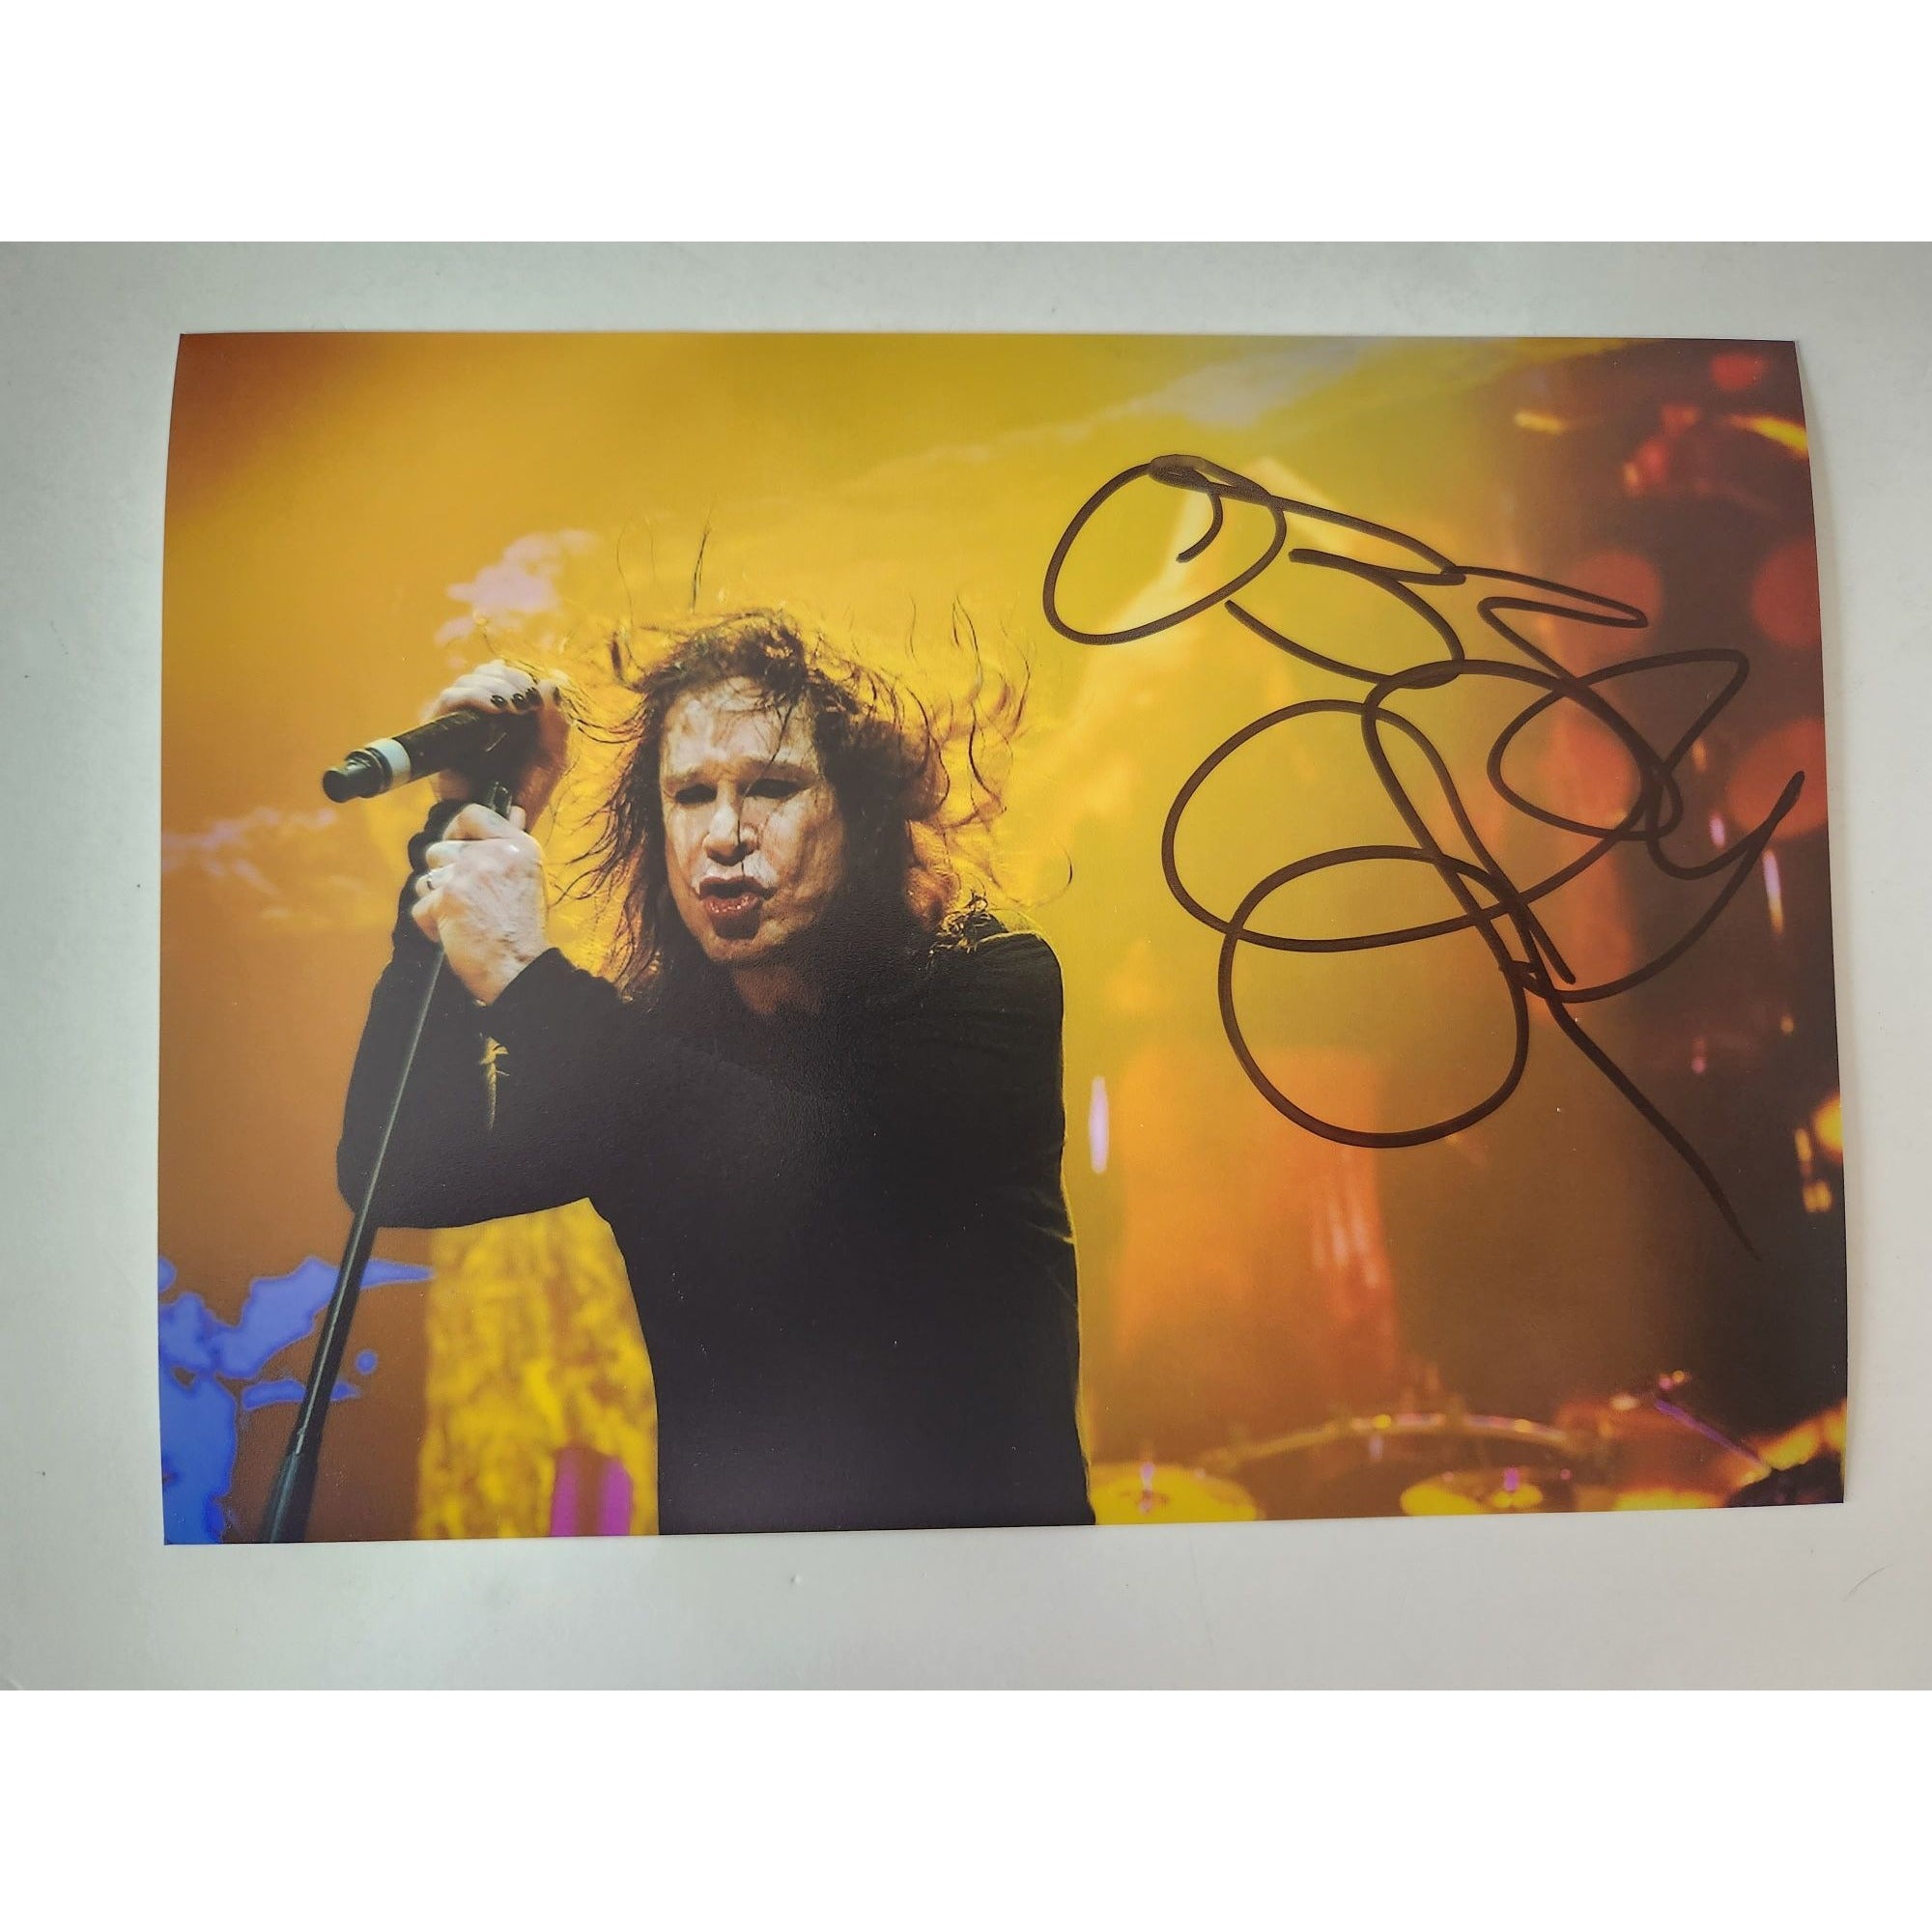 Ozzy Osbourne Black Sabbath lead singer 5x7 photo signed with proof